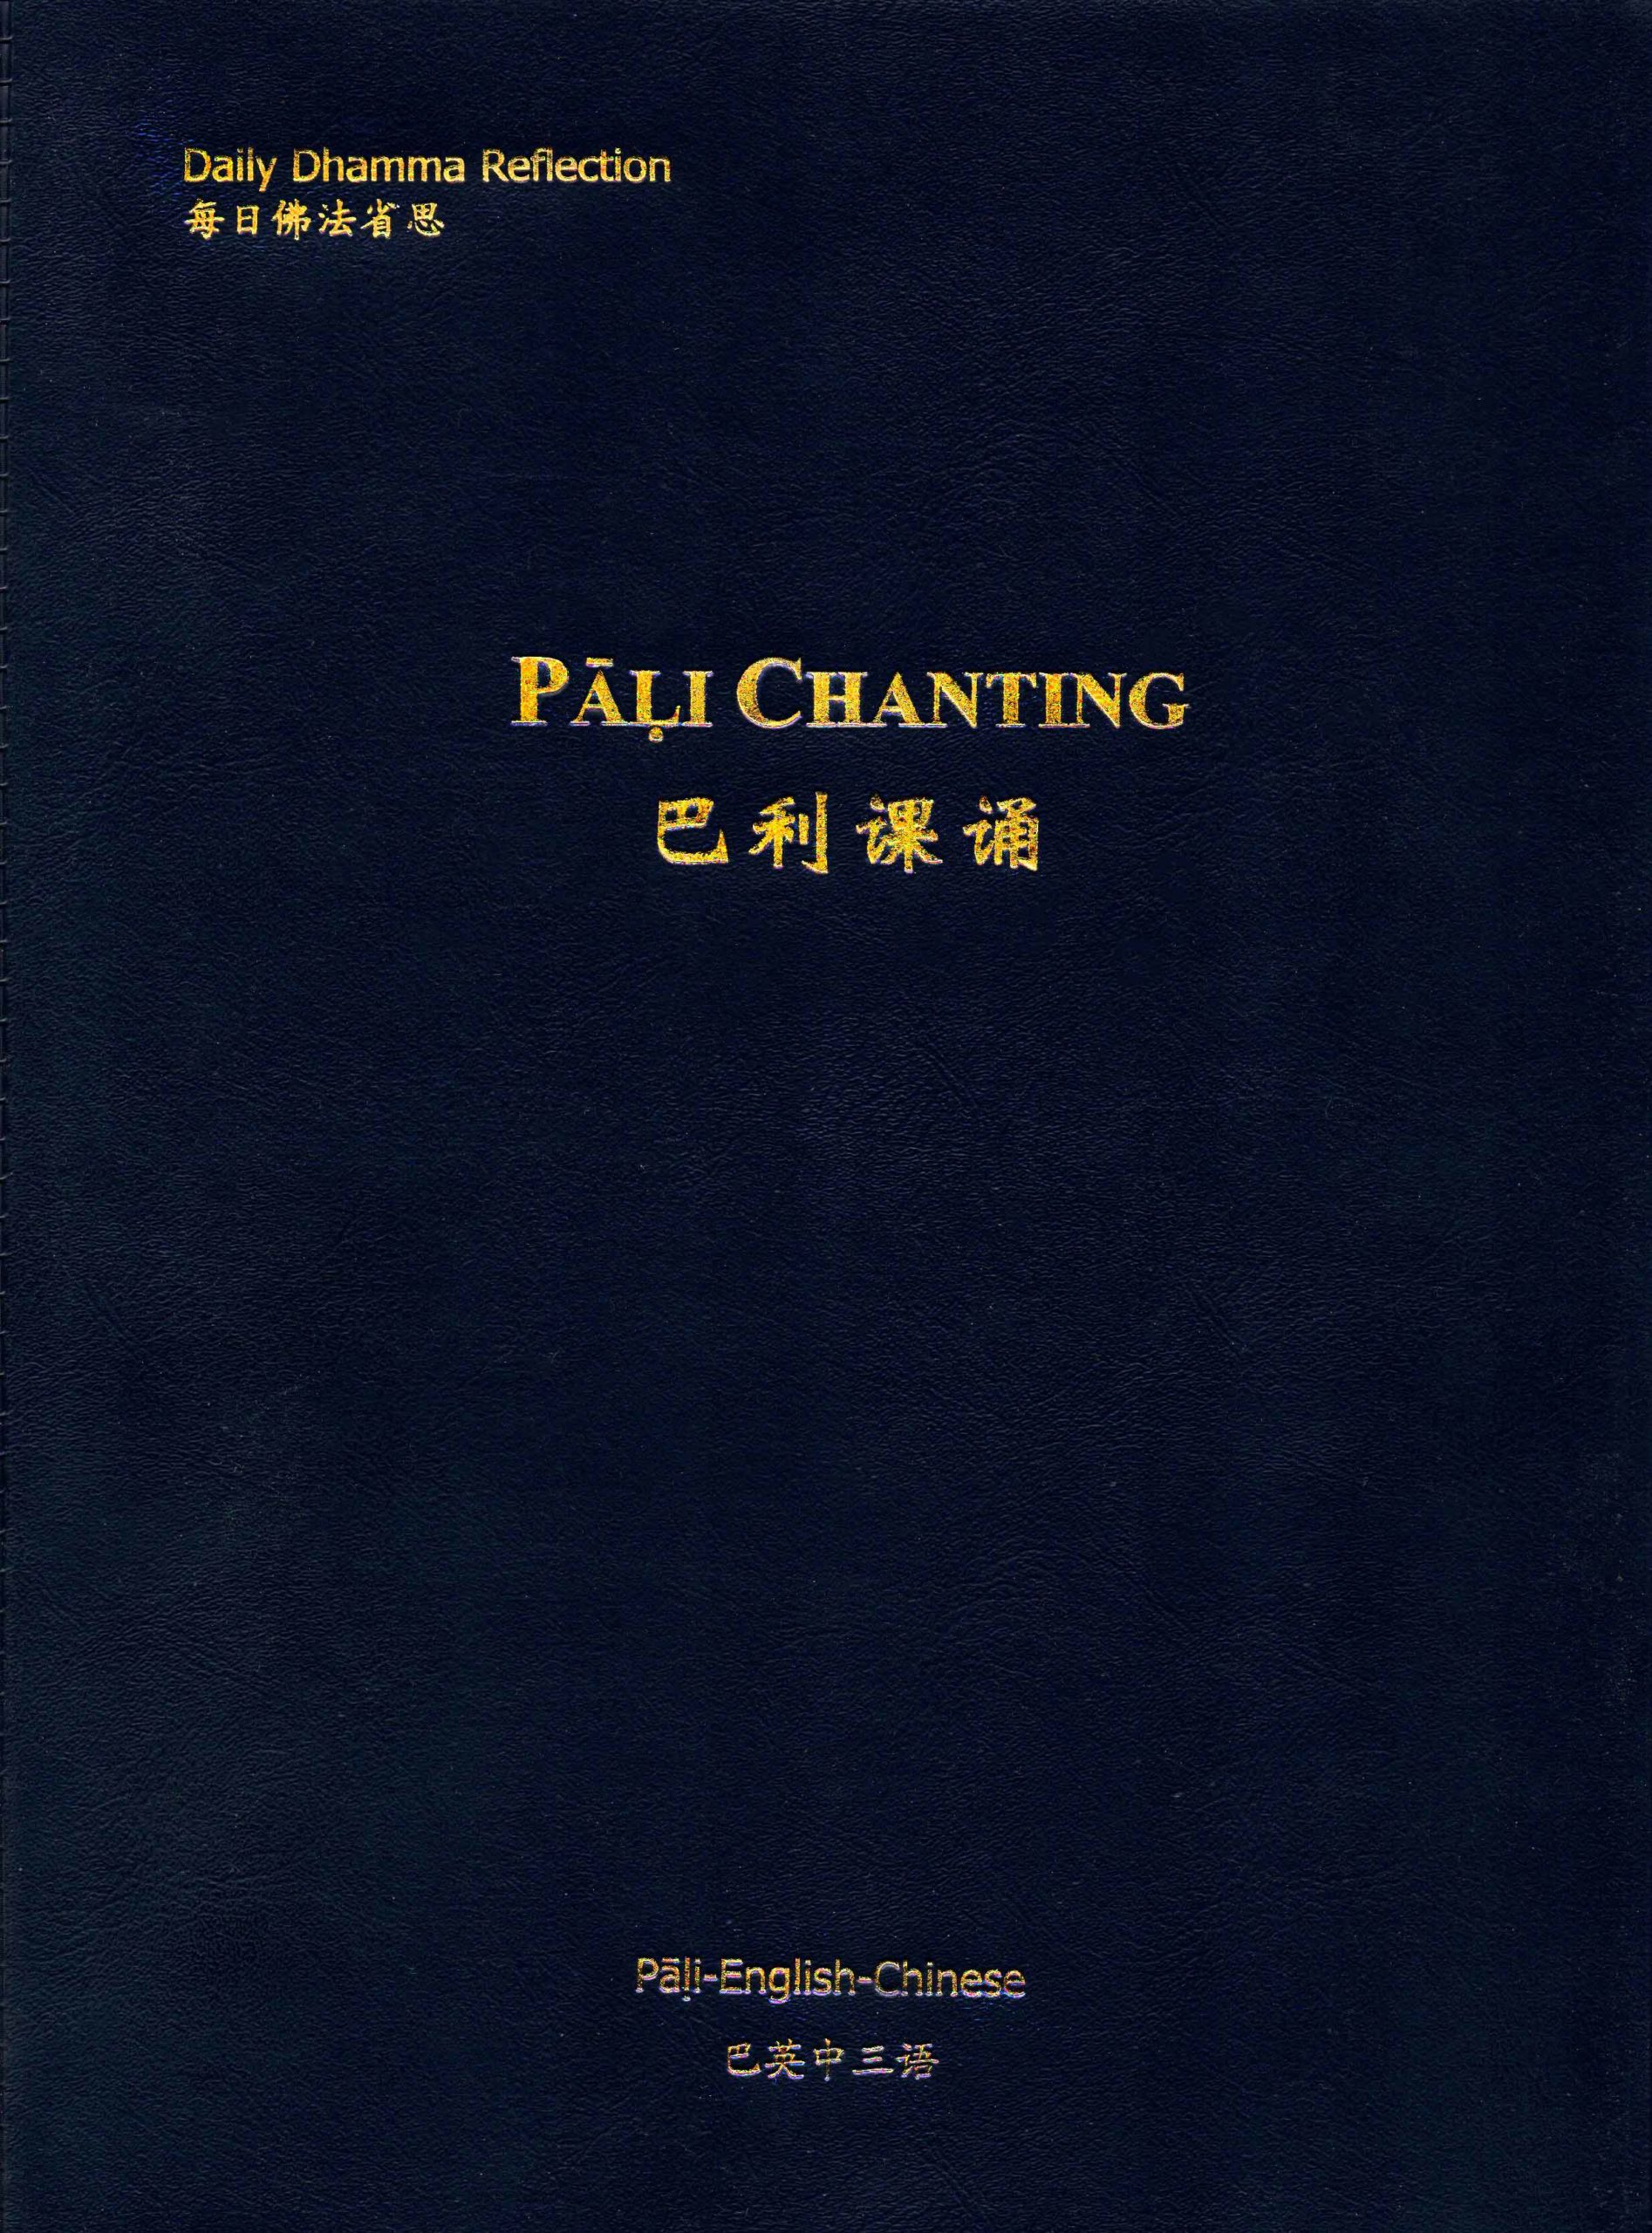 Dhamma Earth Chanting Book Cover 法域课诵本